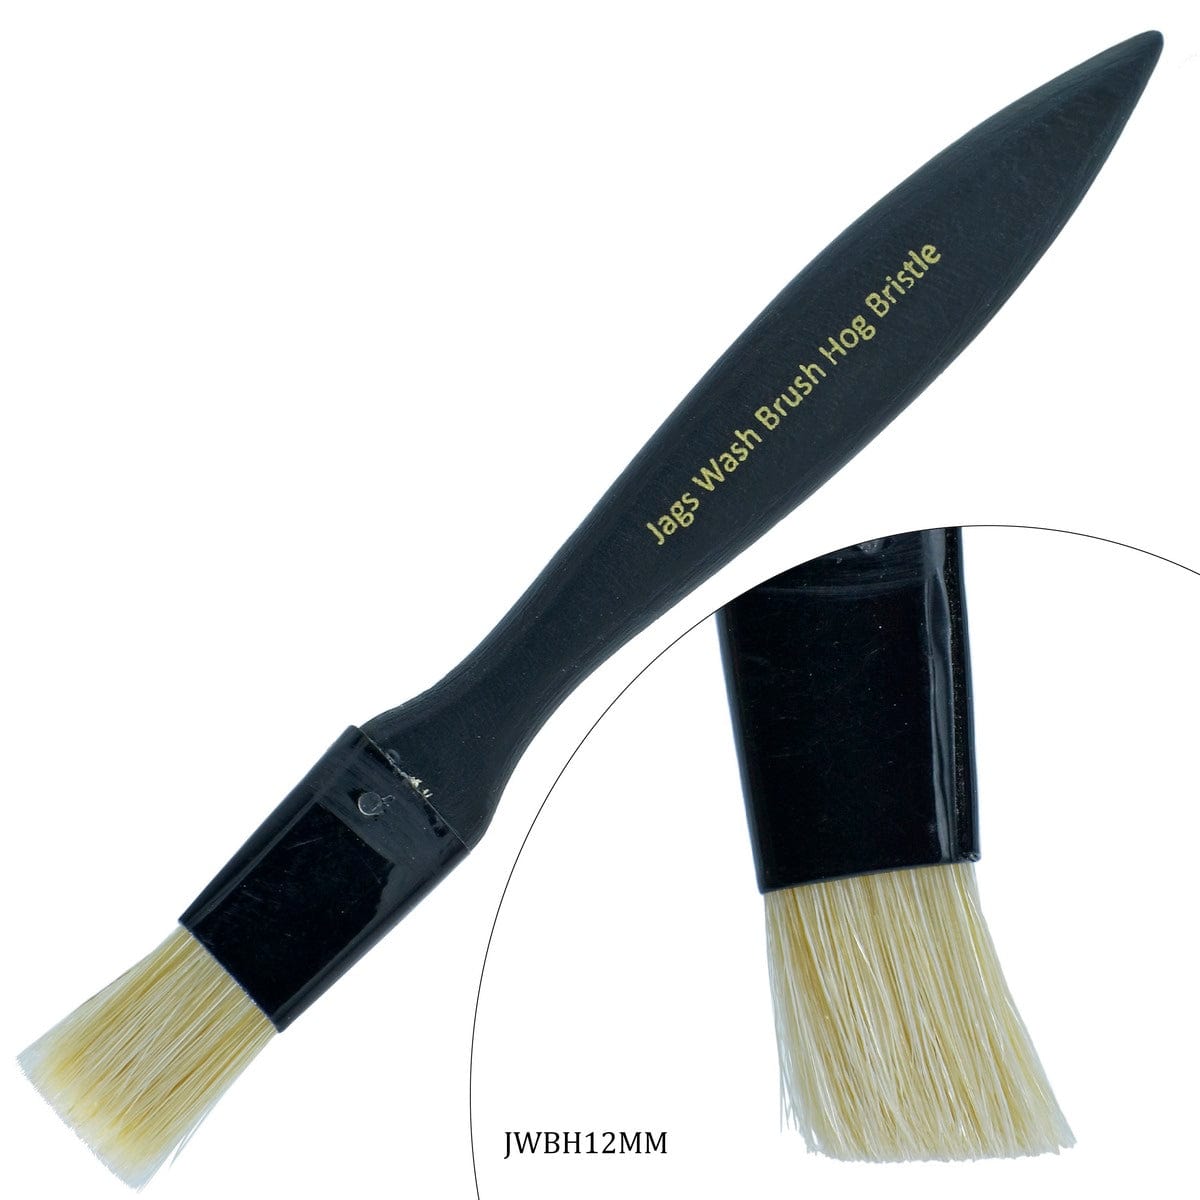 jags-mumbai Tools Jags Wash Brush Hog Bristle Black Handle 12MM - Fine Detailing Tool for Precision Cleaning